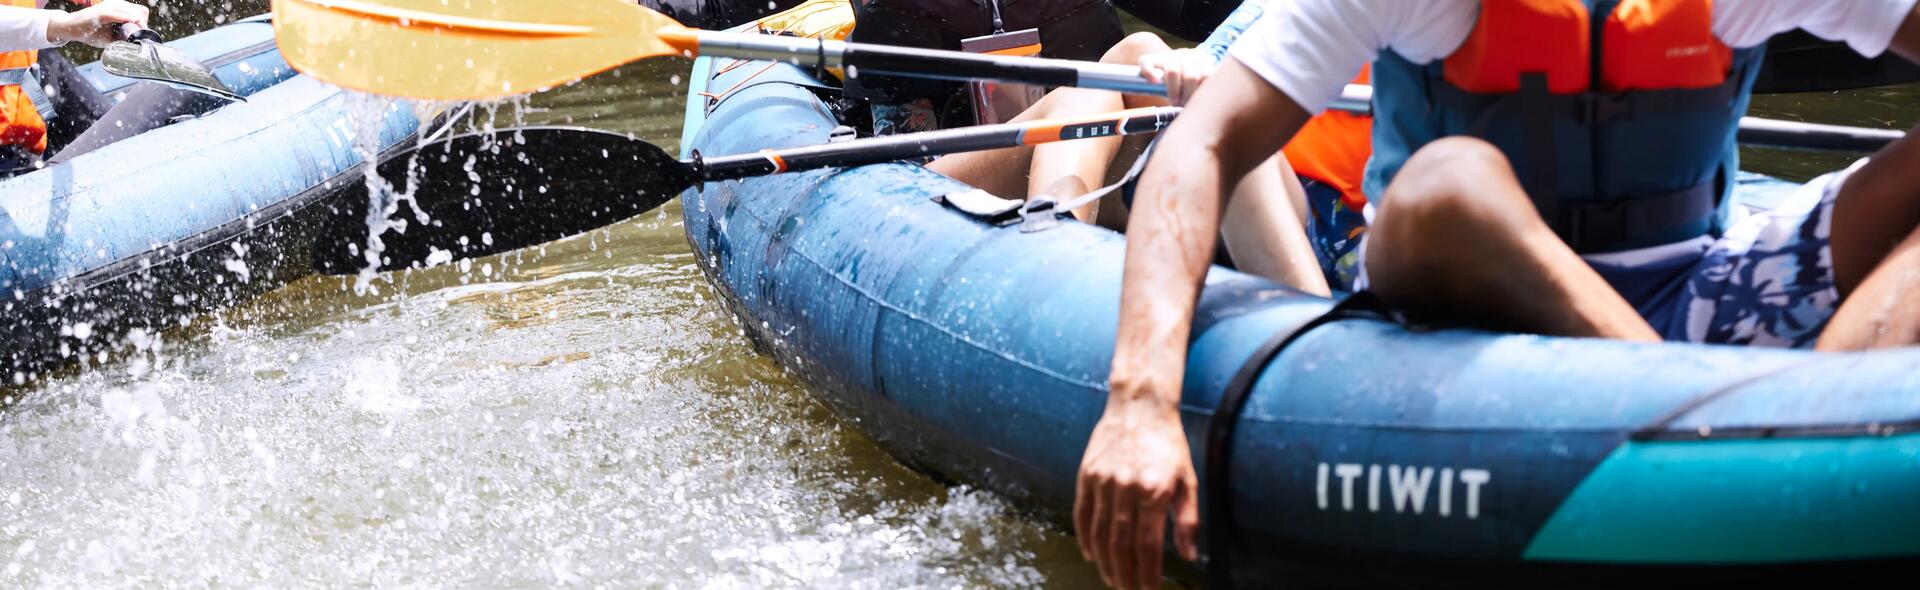 Close-up of people on itiwit kayak